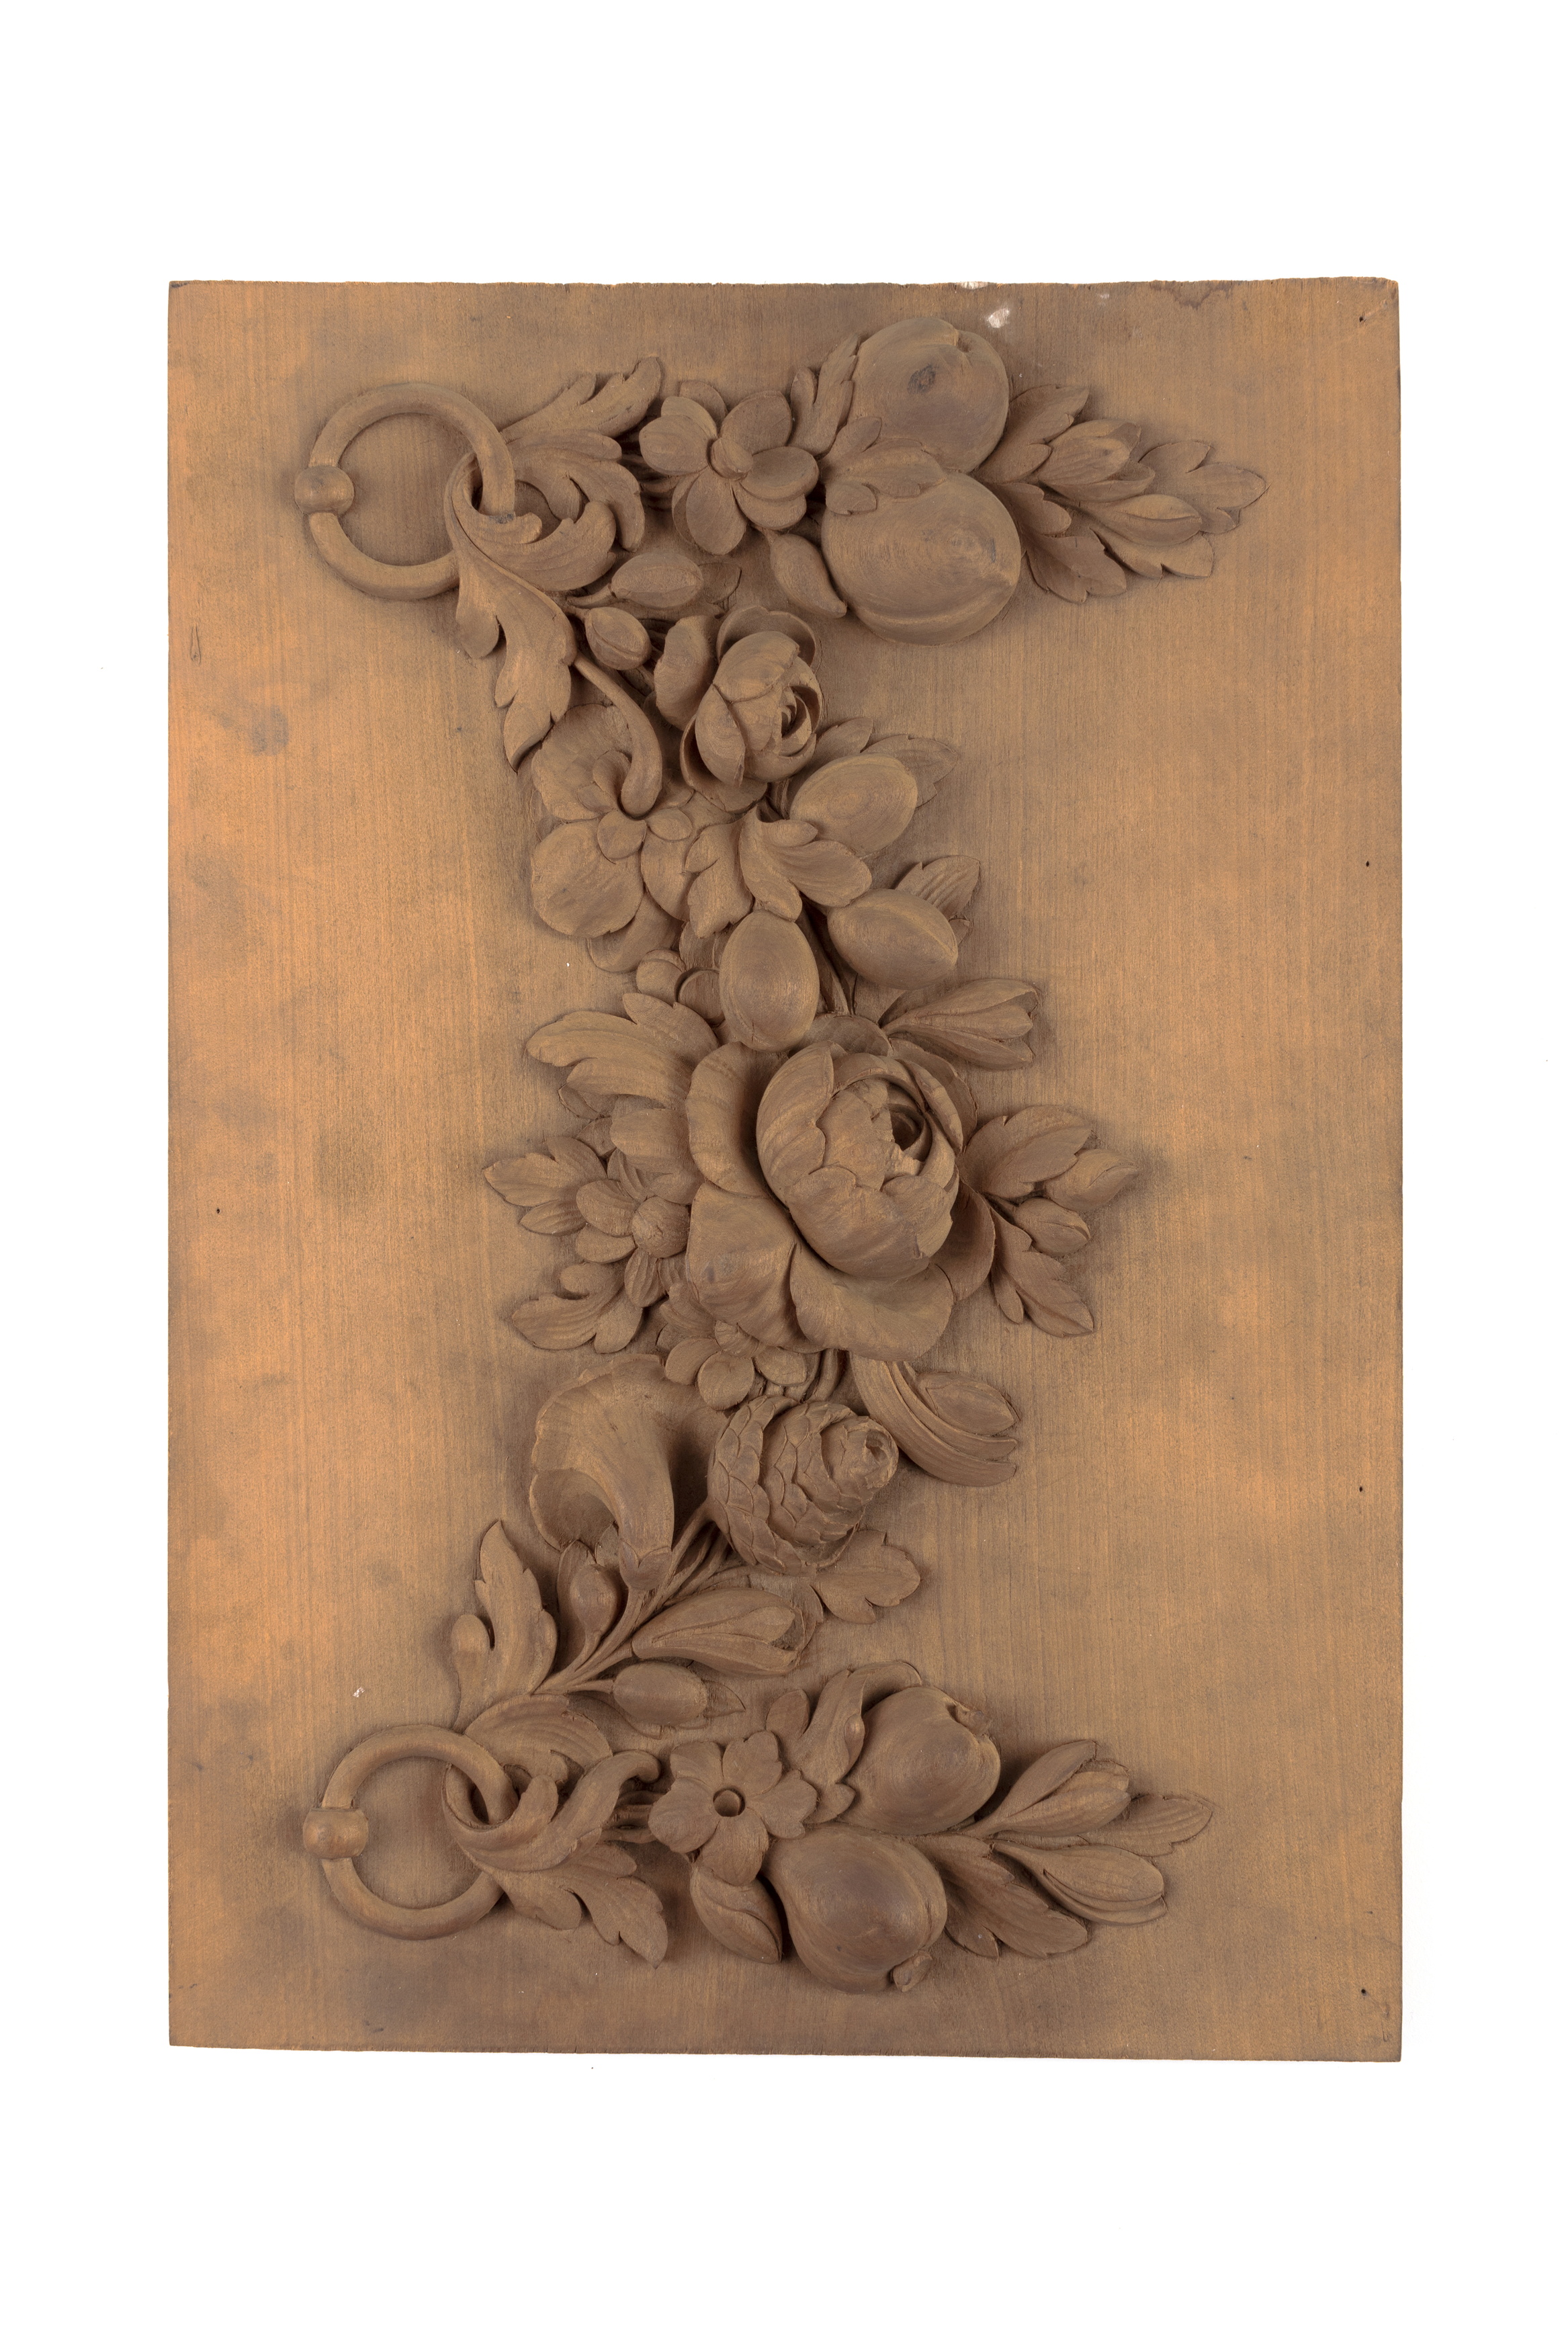 Ceratopetalum apetalum (Coachwood) wood carving crafted by Frederick William Tod